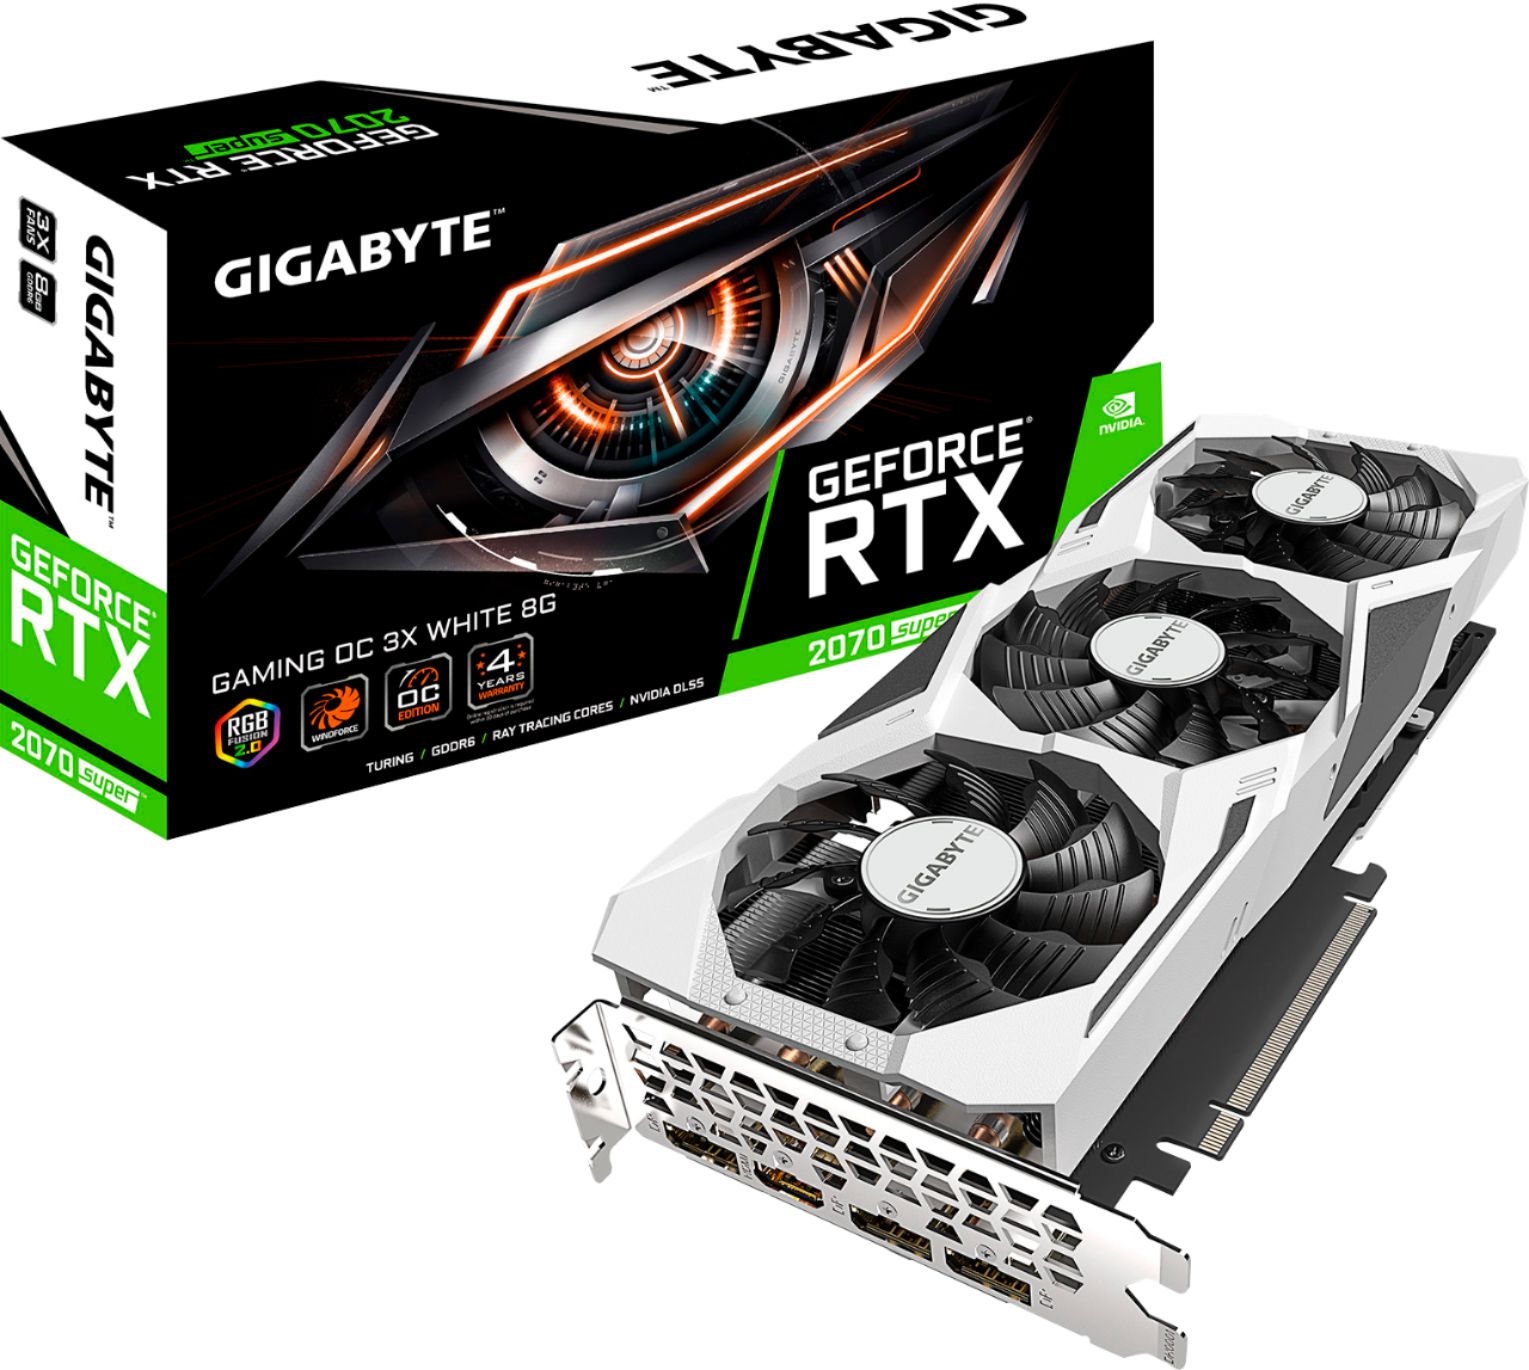 GIGABYTE - NVIDIA GeForce RTX 2070 SUPER GAMING OC 3X